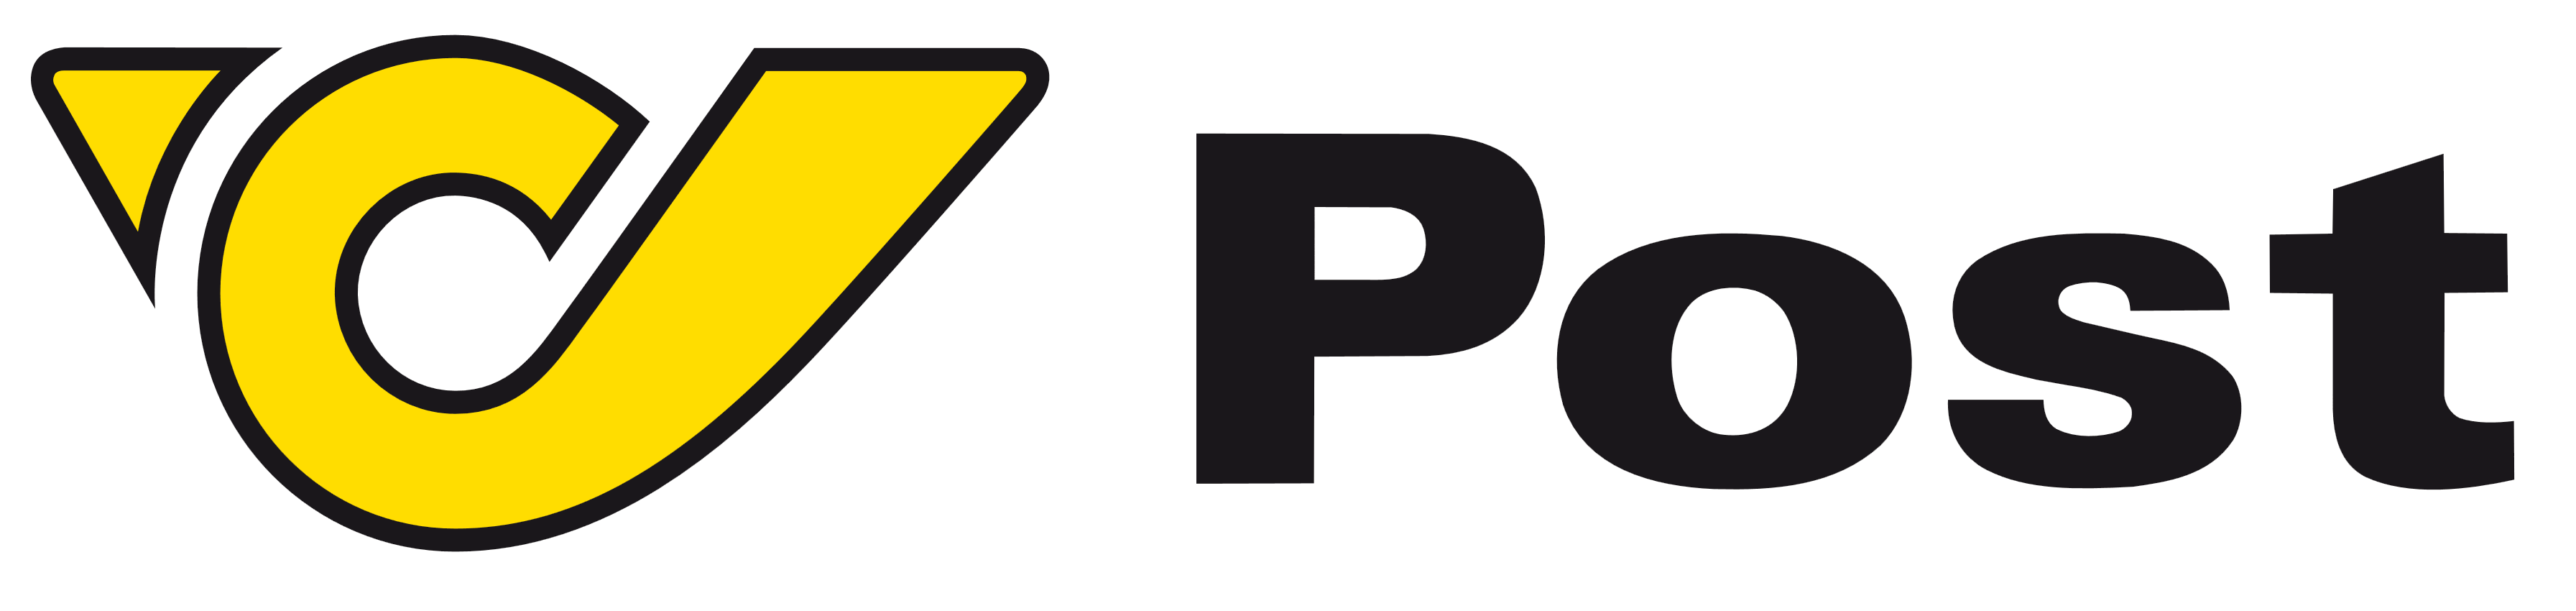 Post AG logo, logotype